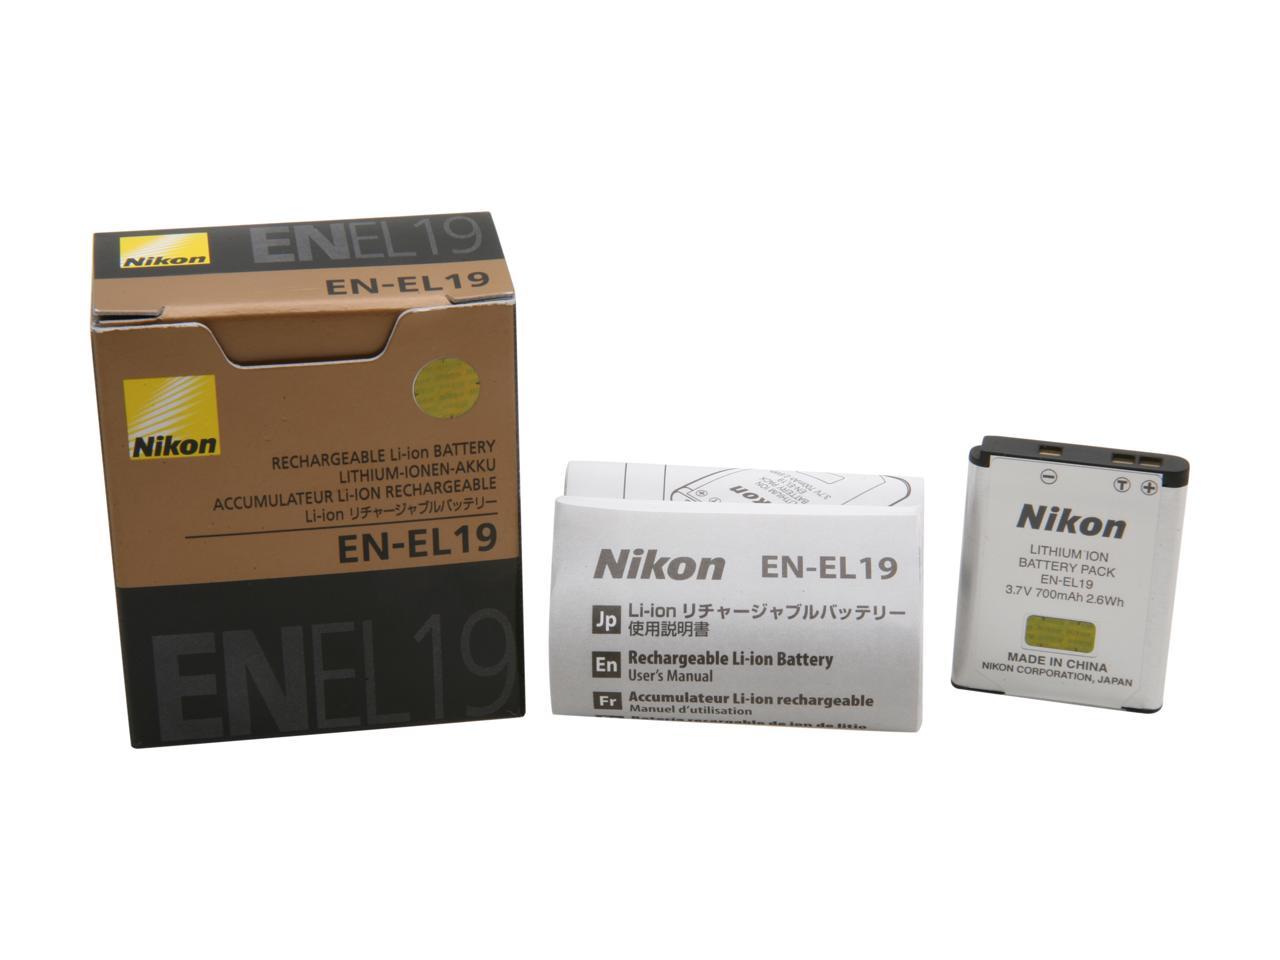 Nikon En El19 Rechargeable Battery Newegg Com